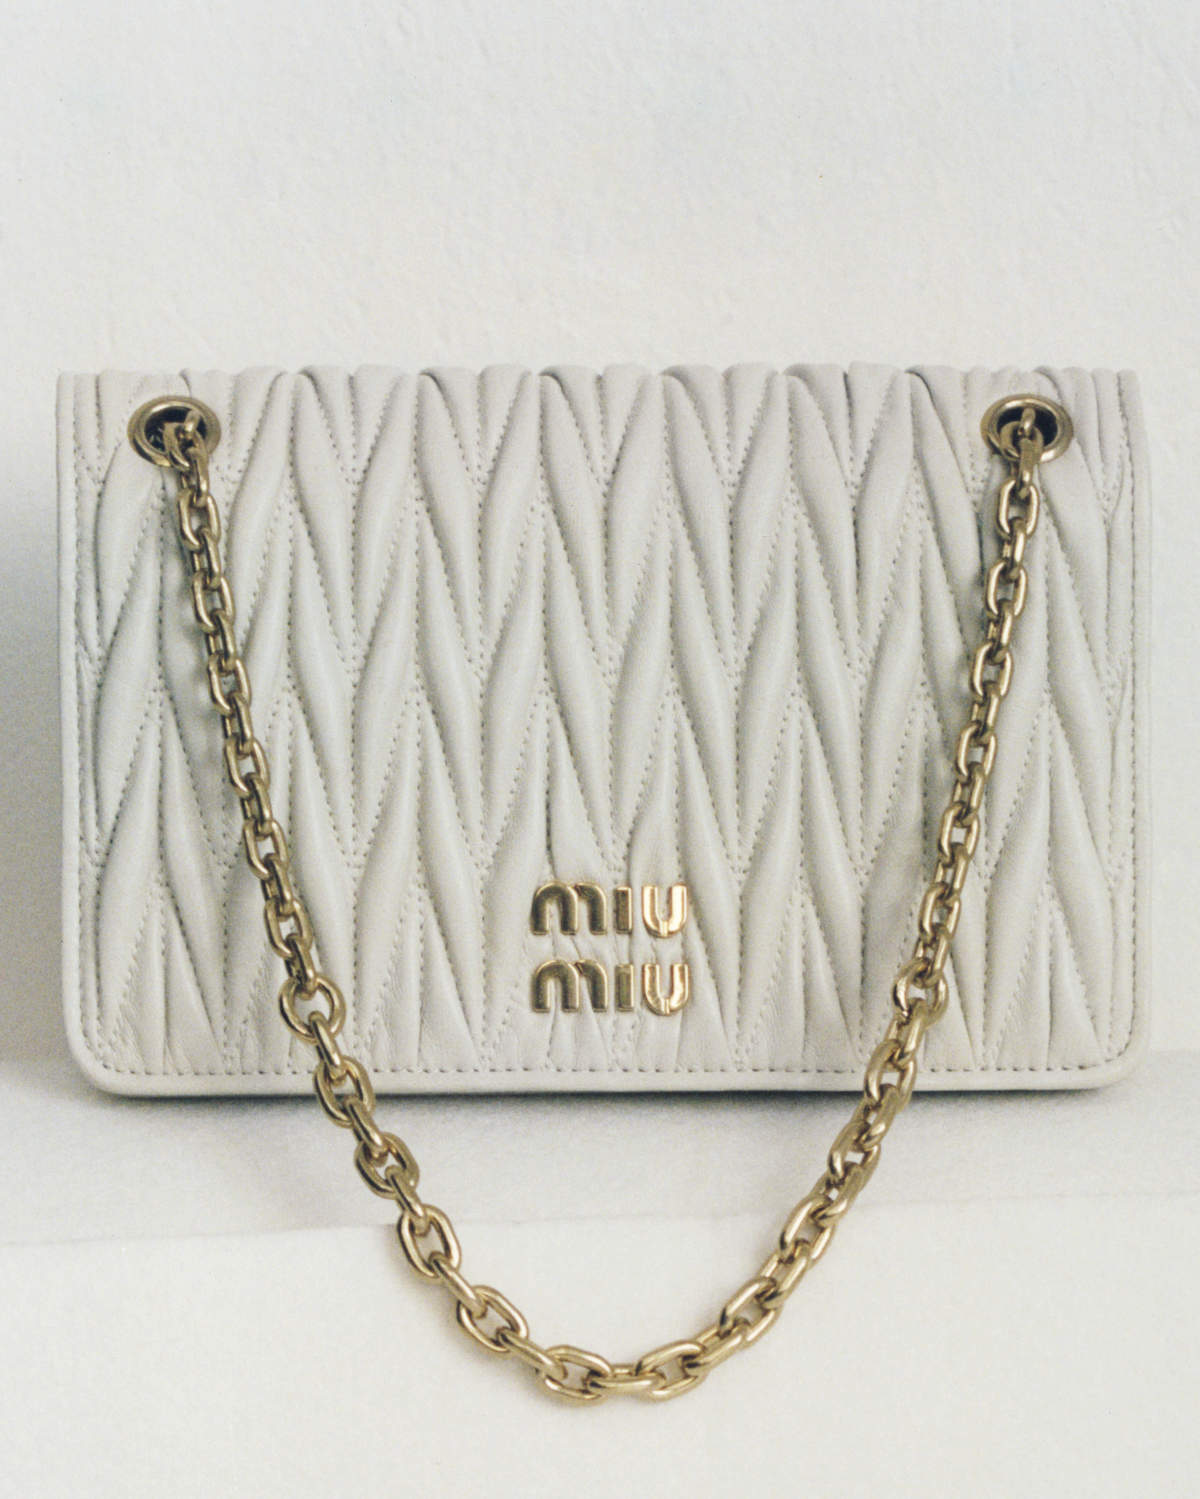 Miu Miu Celebrates Its Iconic Matelassé Leather Collection